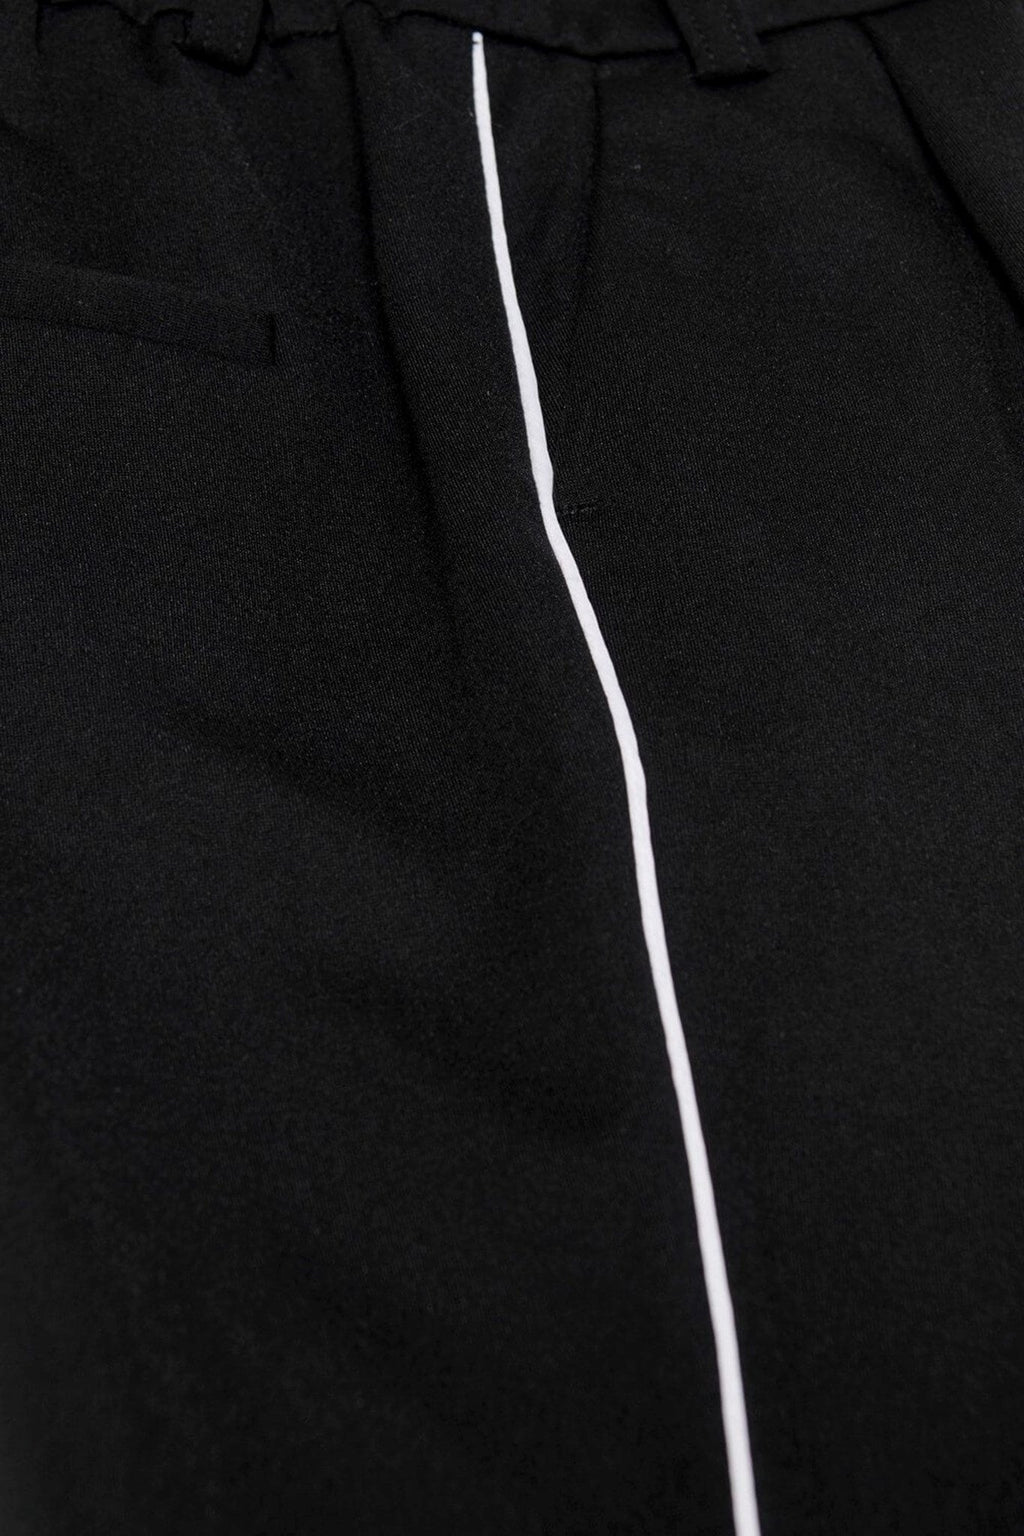 Pantaloni poptrash (bambini) - nero con striscia bianca